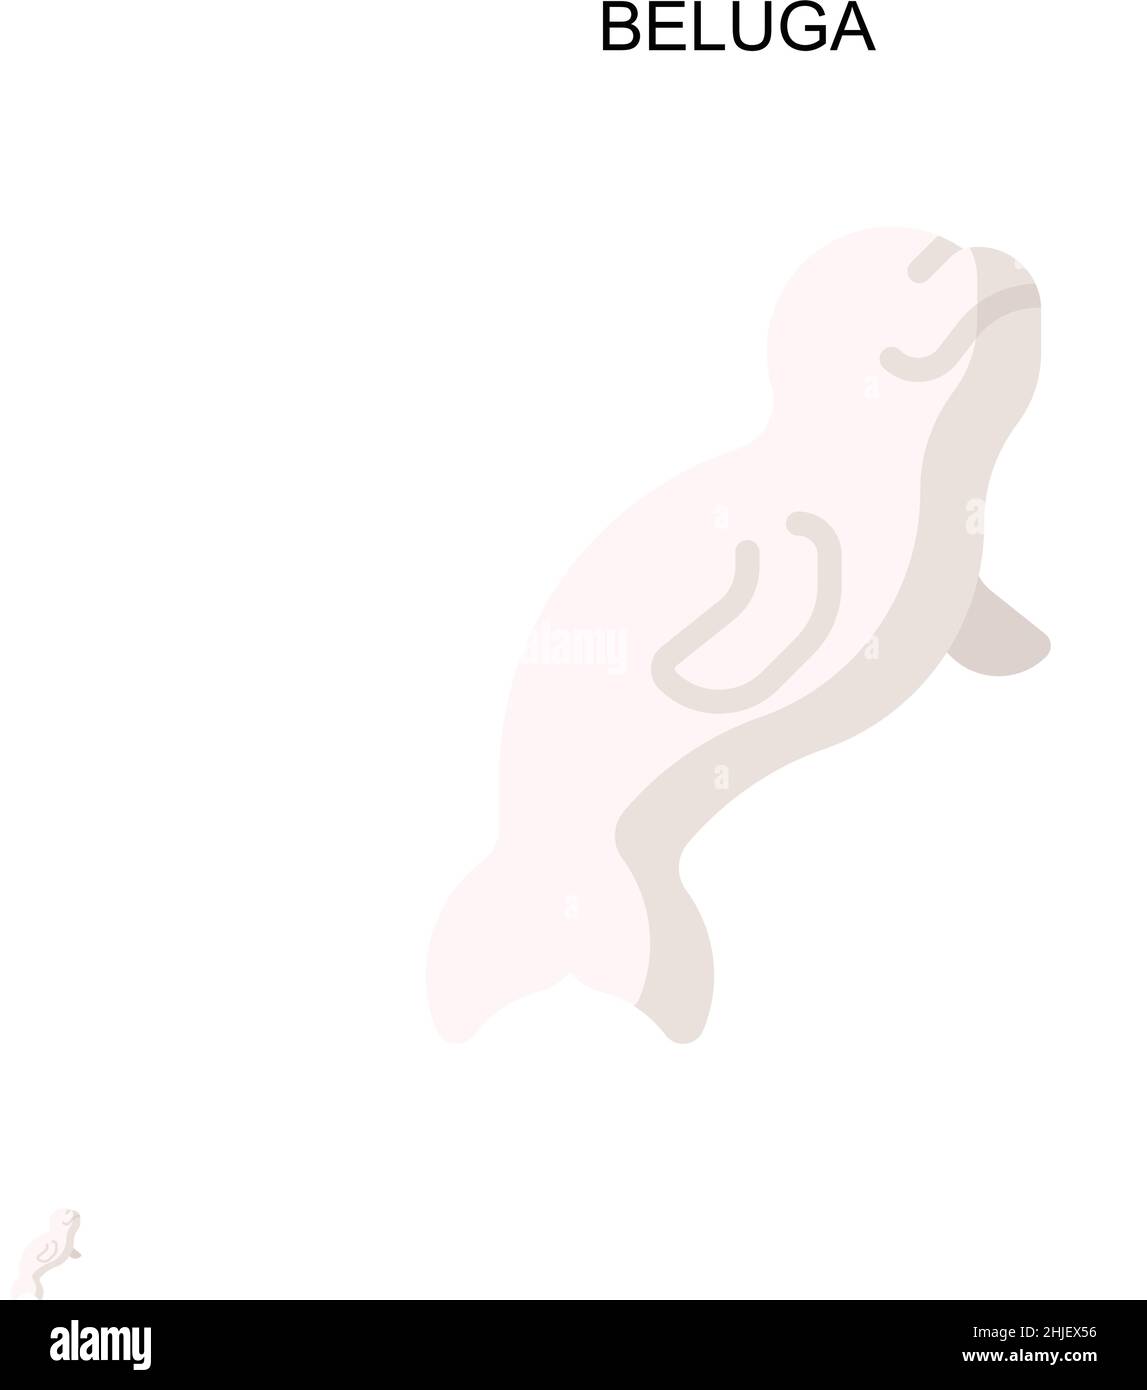 Beluga Simple vector icon. Illustration symbol design template for web mobile UI element. Stock Vector